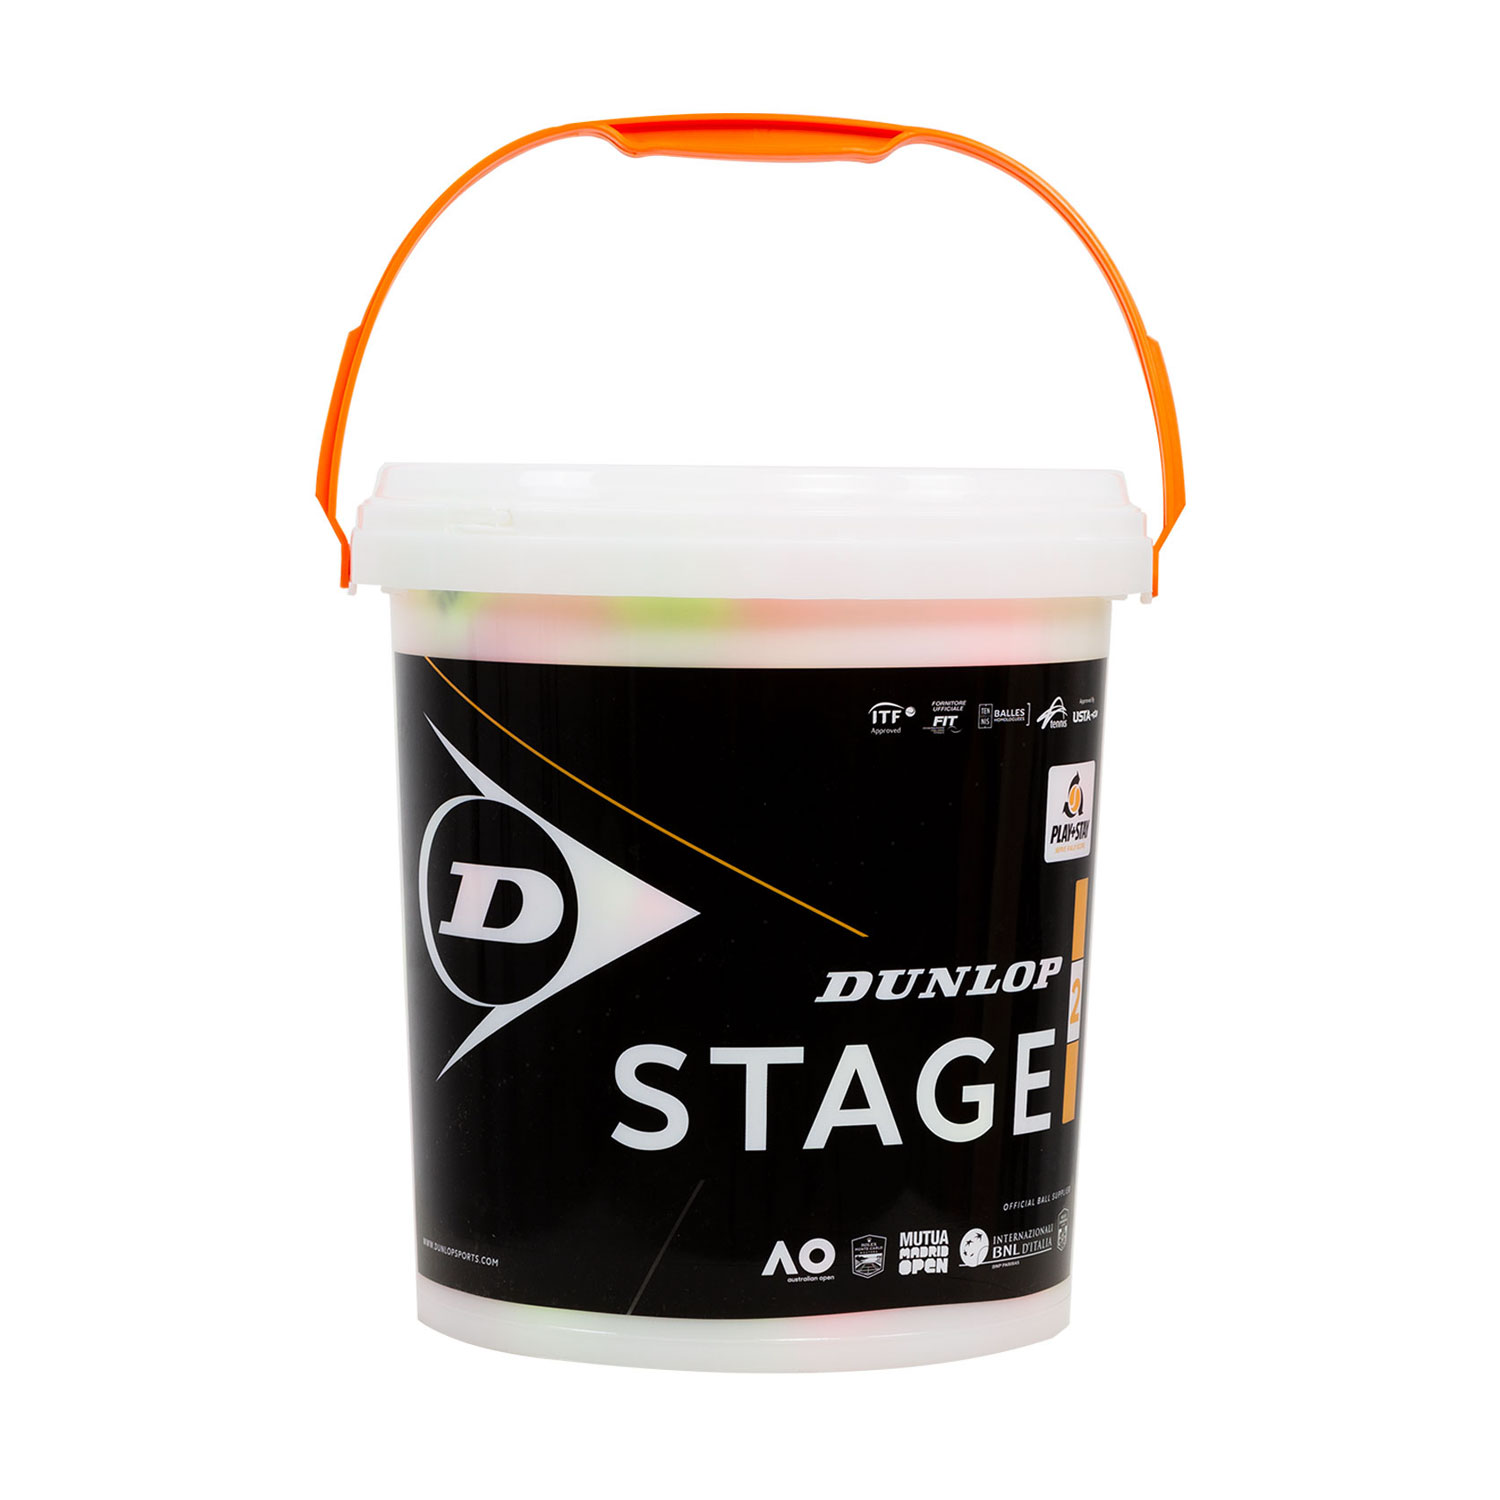 Dunlop Stage 2 Orange - Barril de 60 Pelotas